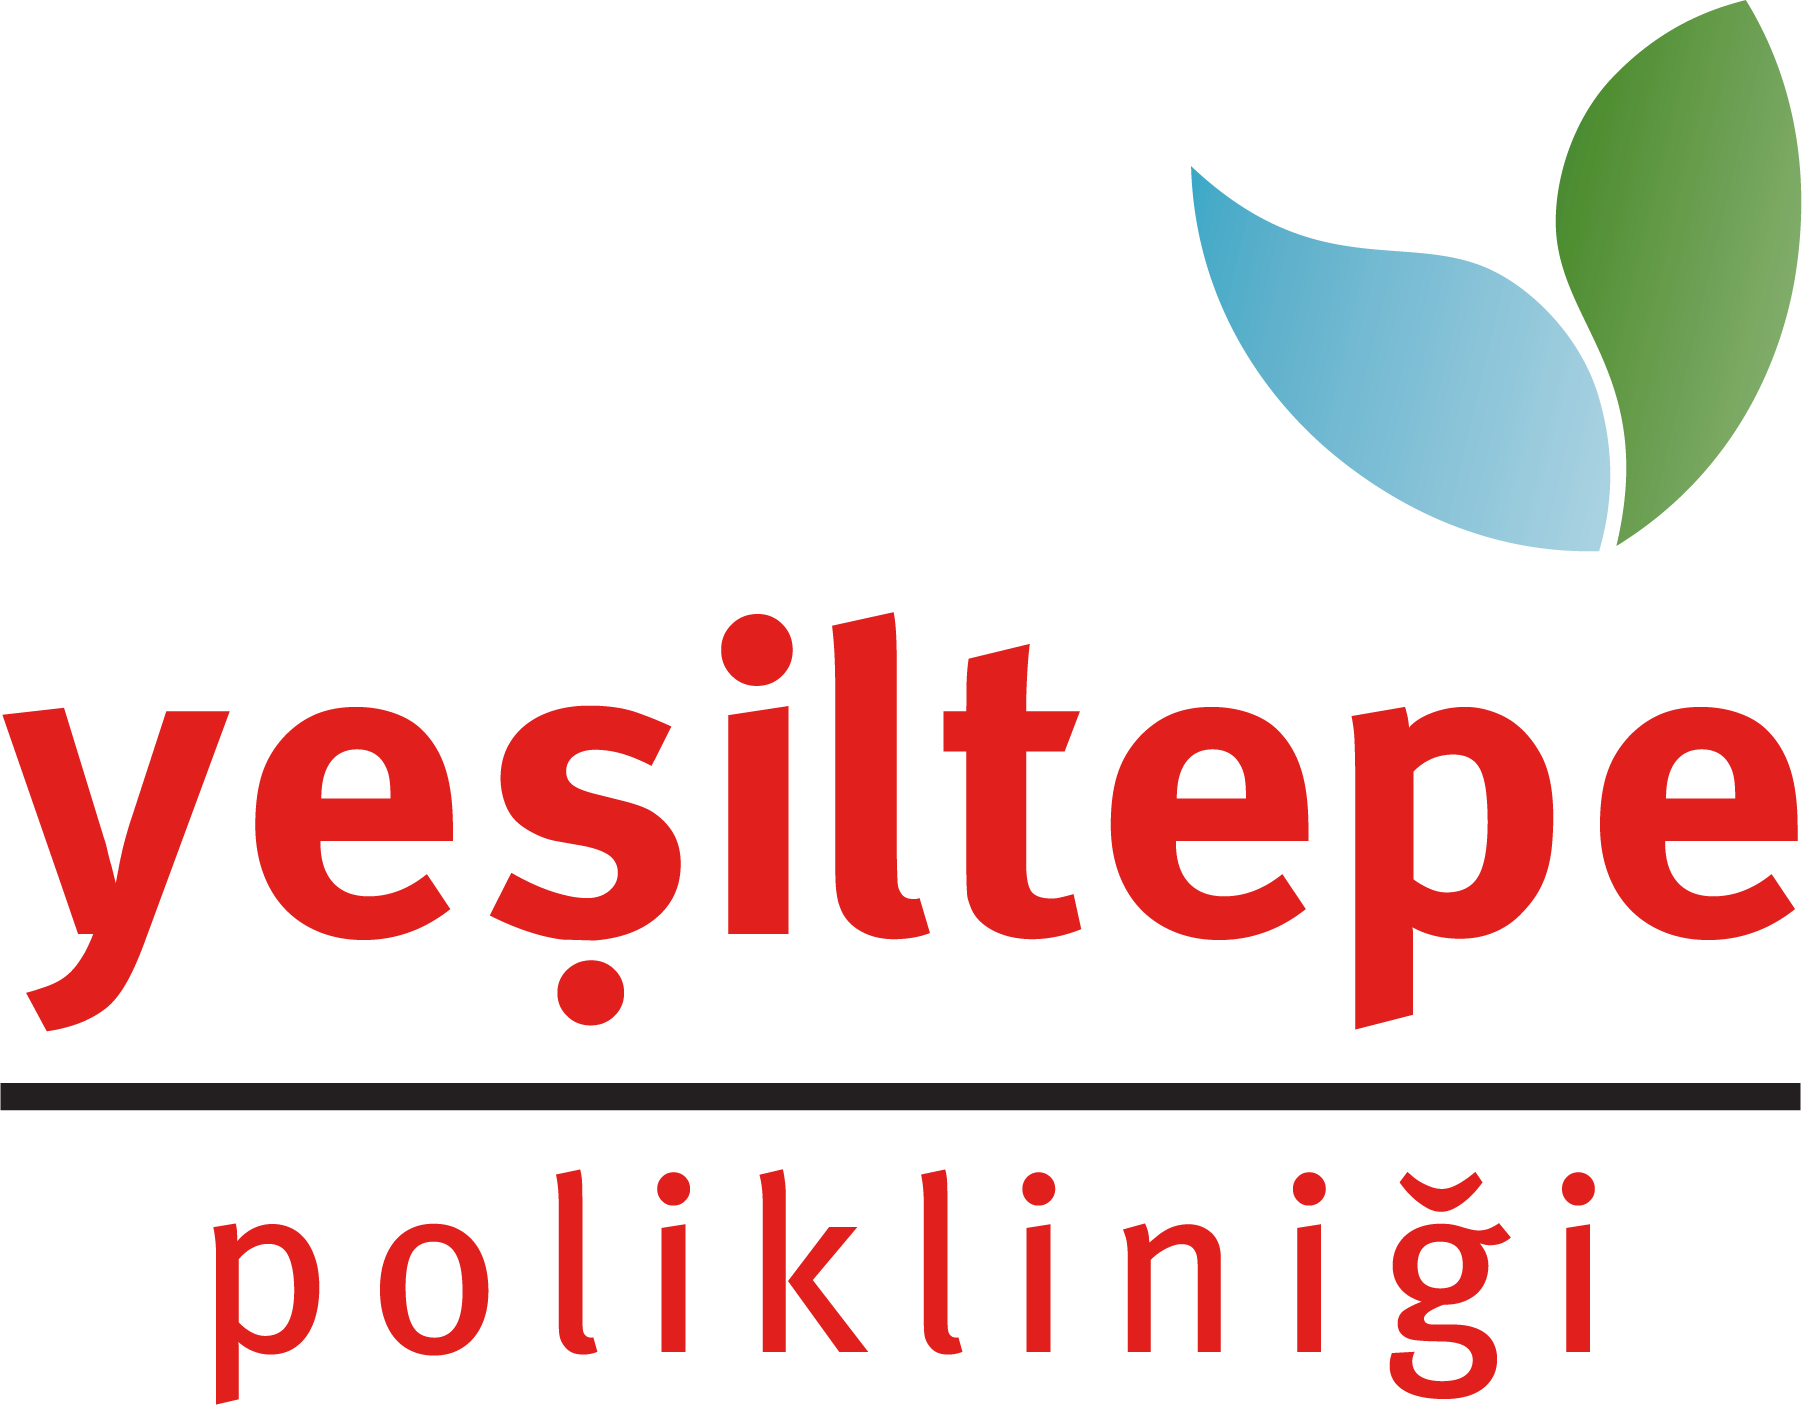 https://yesiltepepoliklinigi.com/wp-content/uploads/2021/04/logo.png